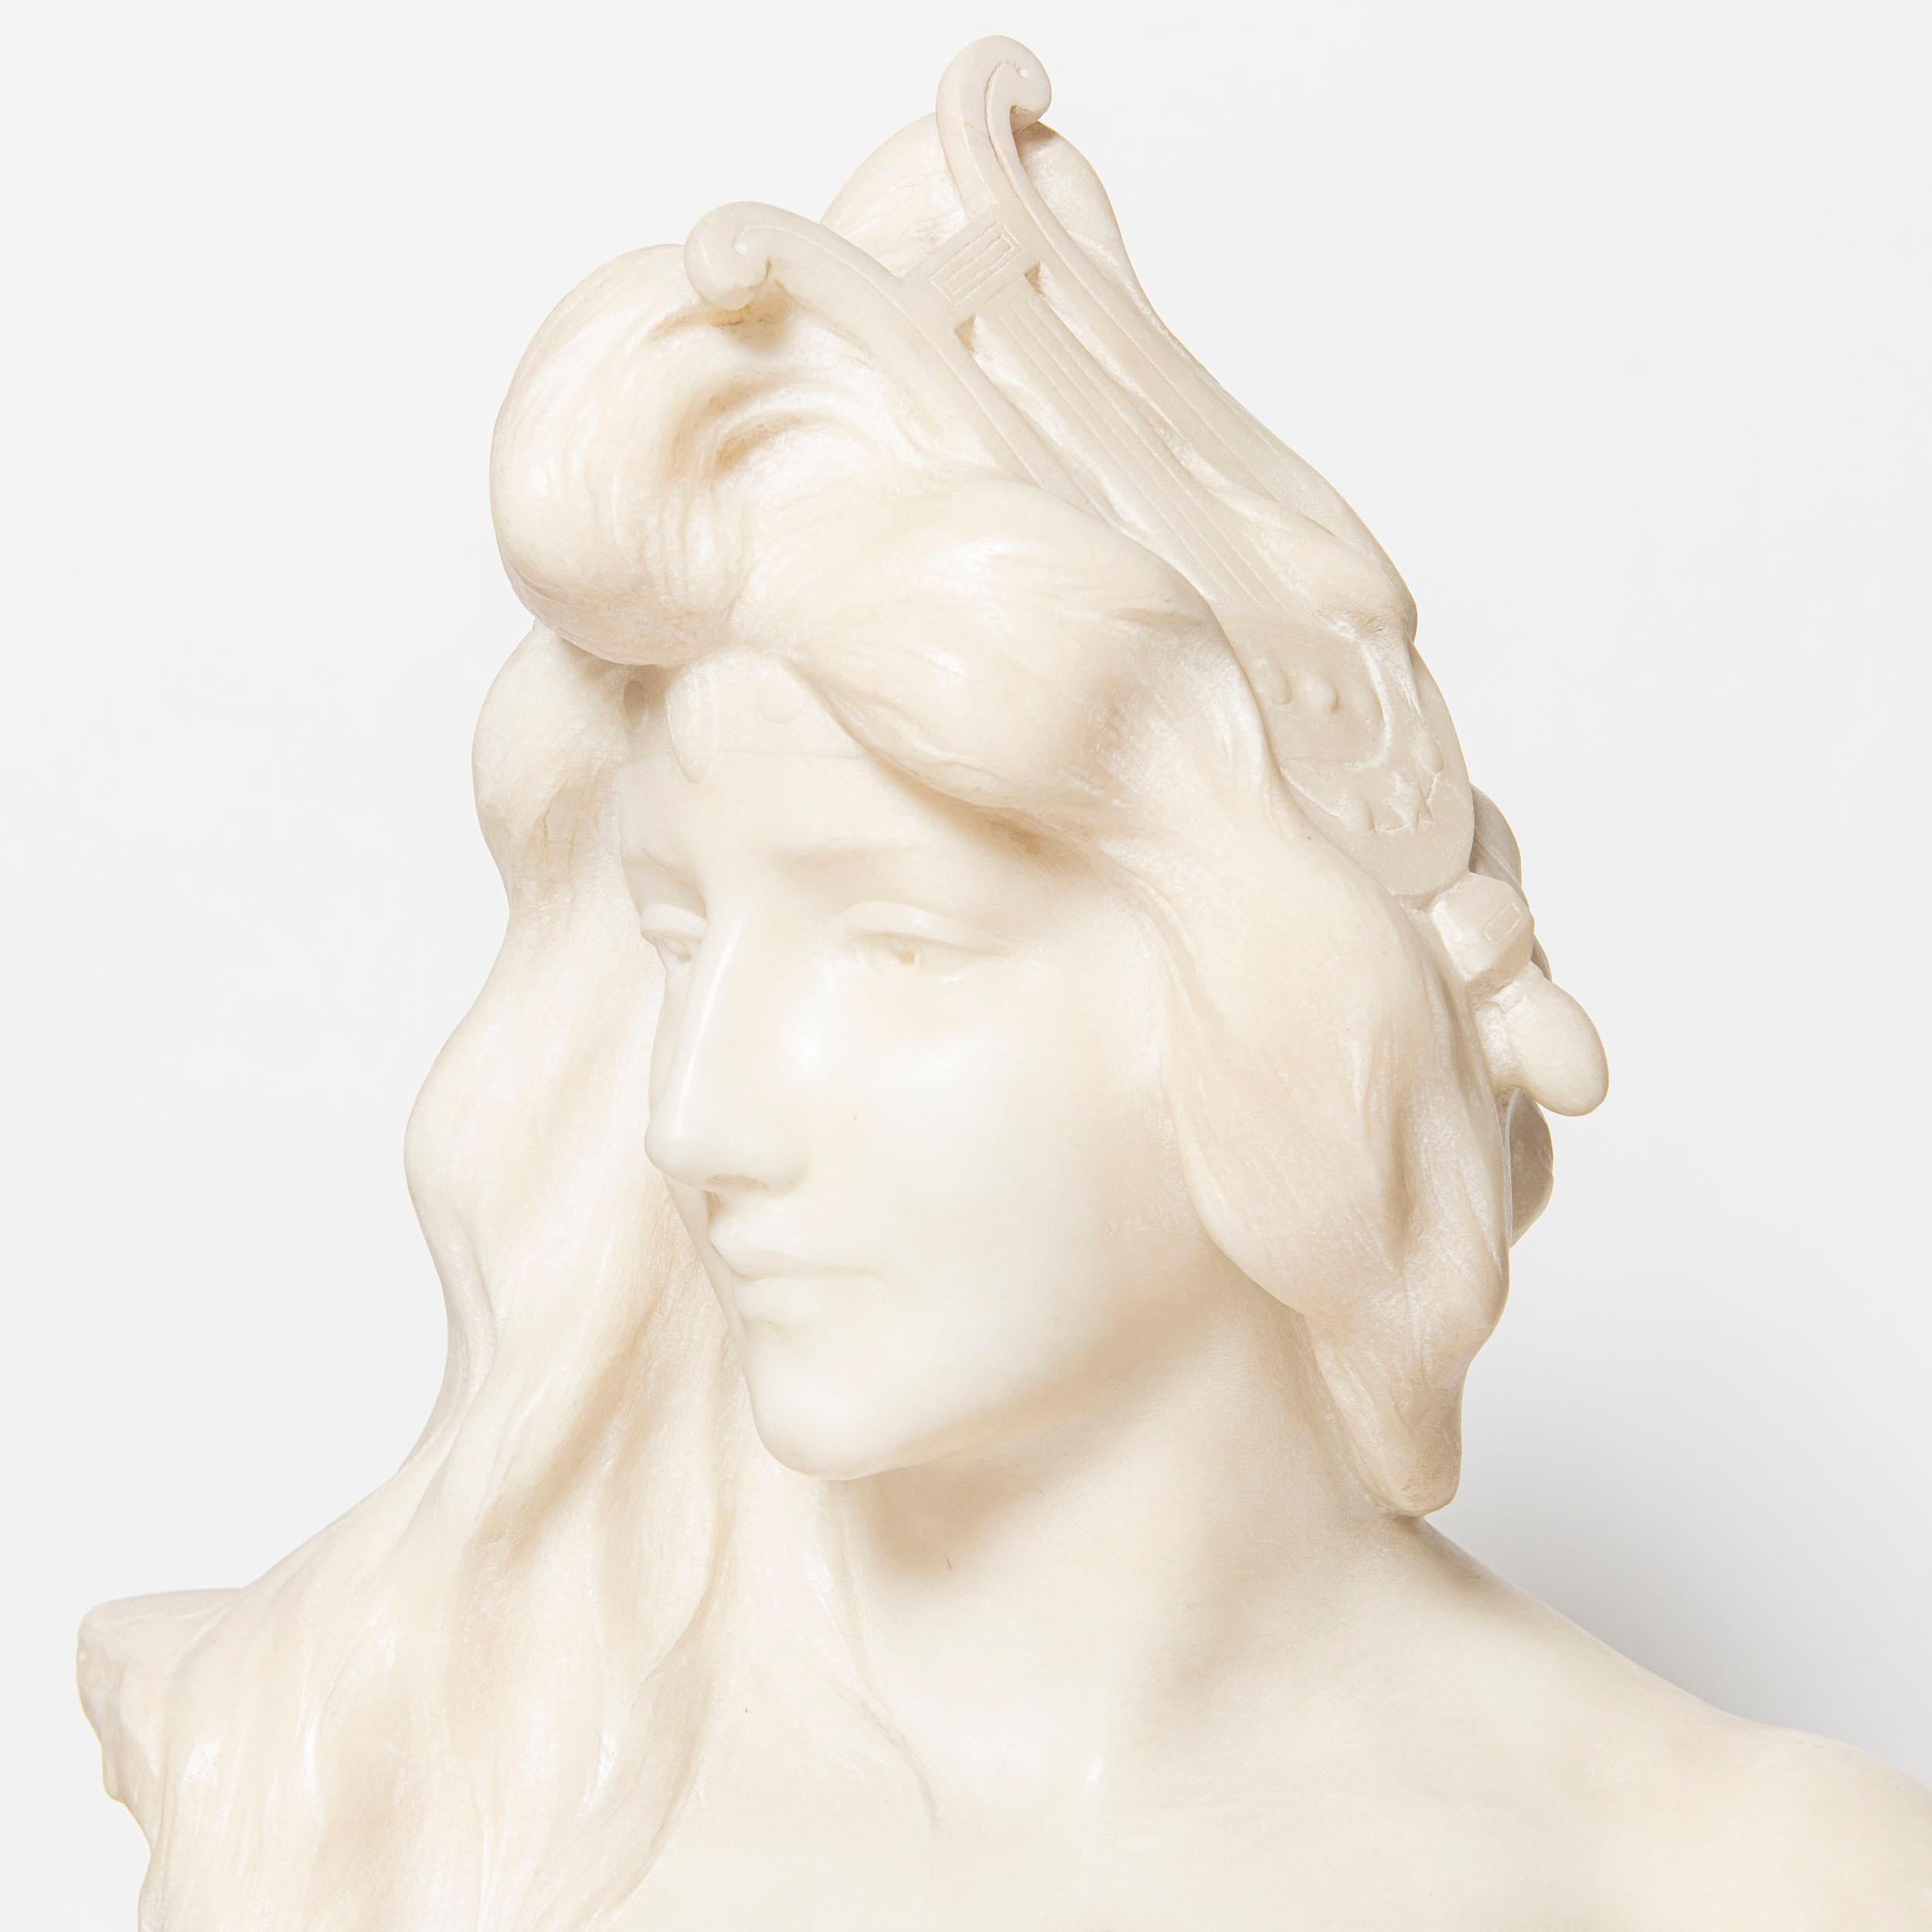 Carrara marble bust sculpture signed H. Moreau, France, circa 1890.